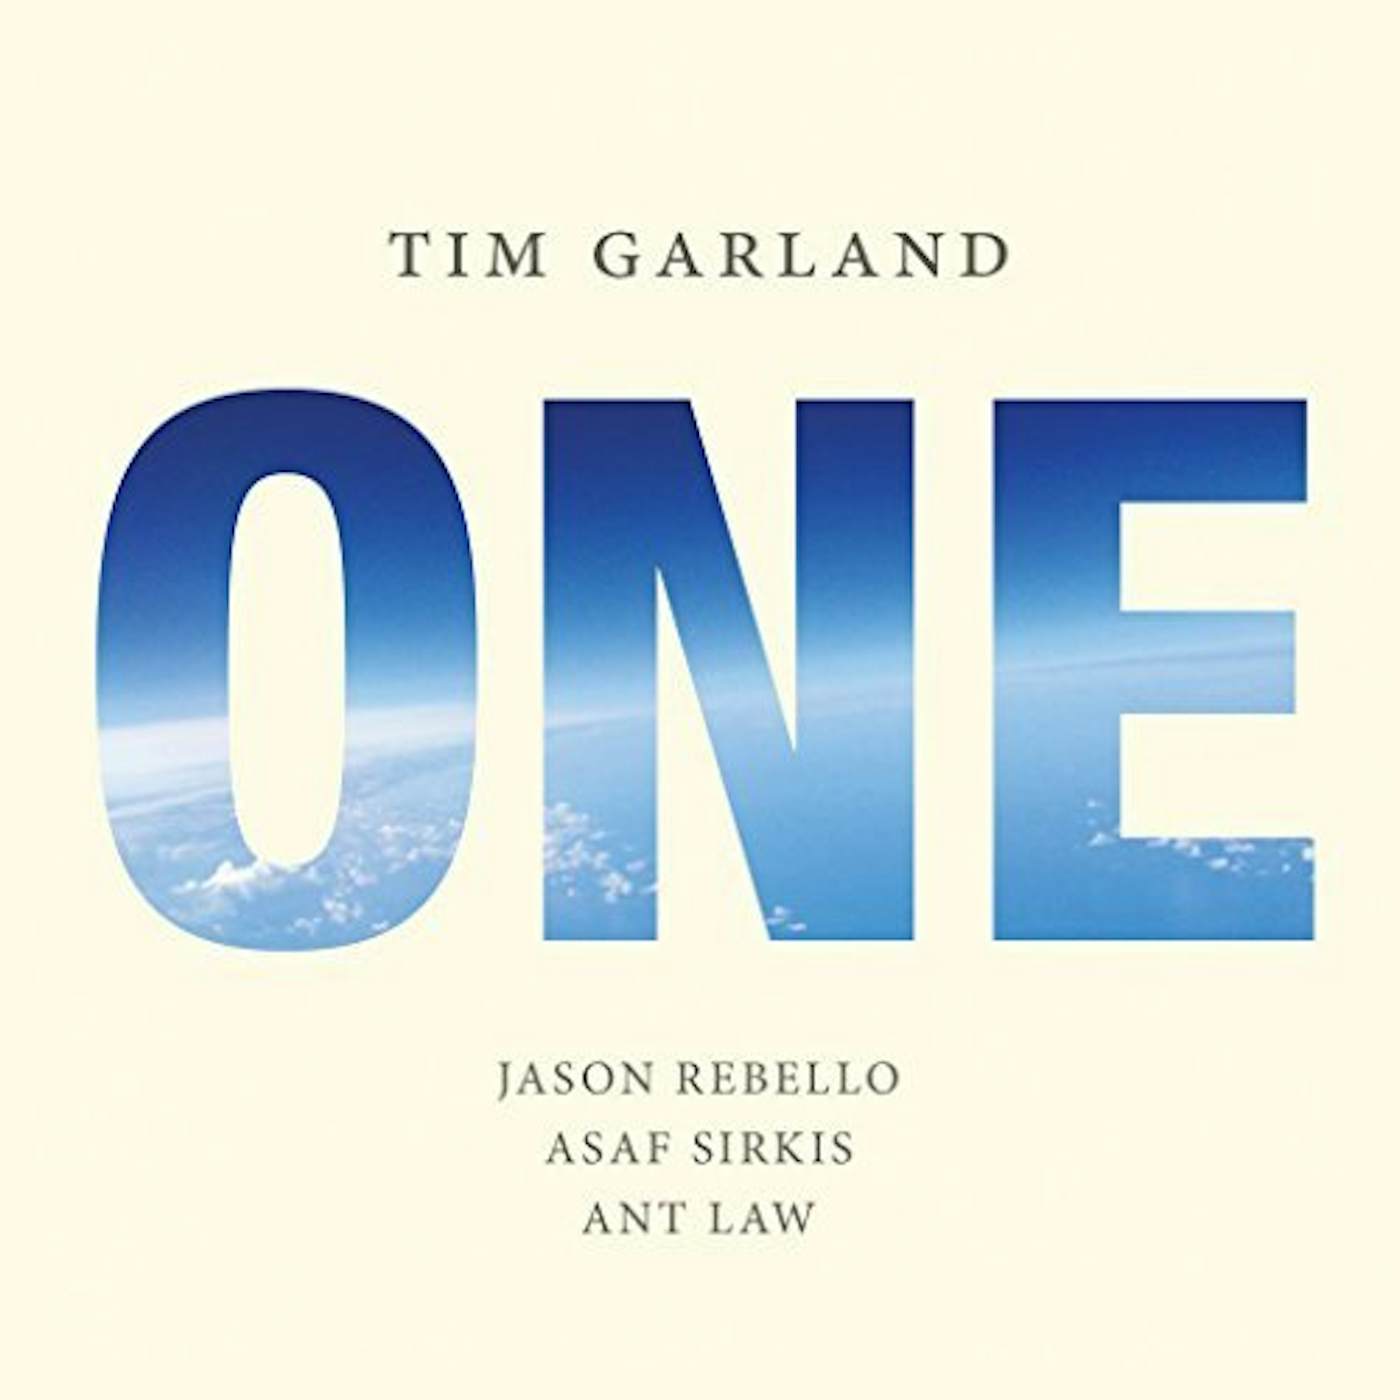 Tim Garland ONE CD